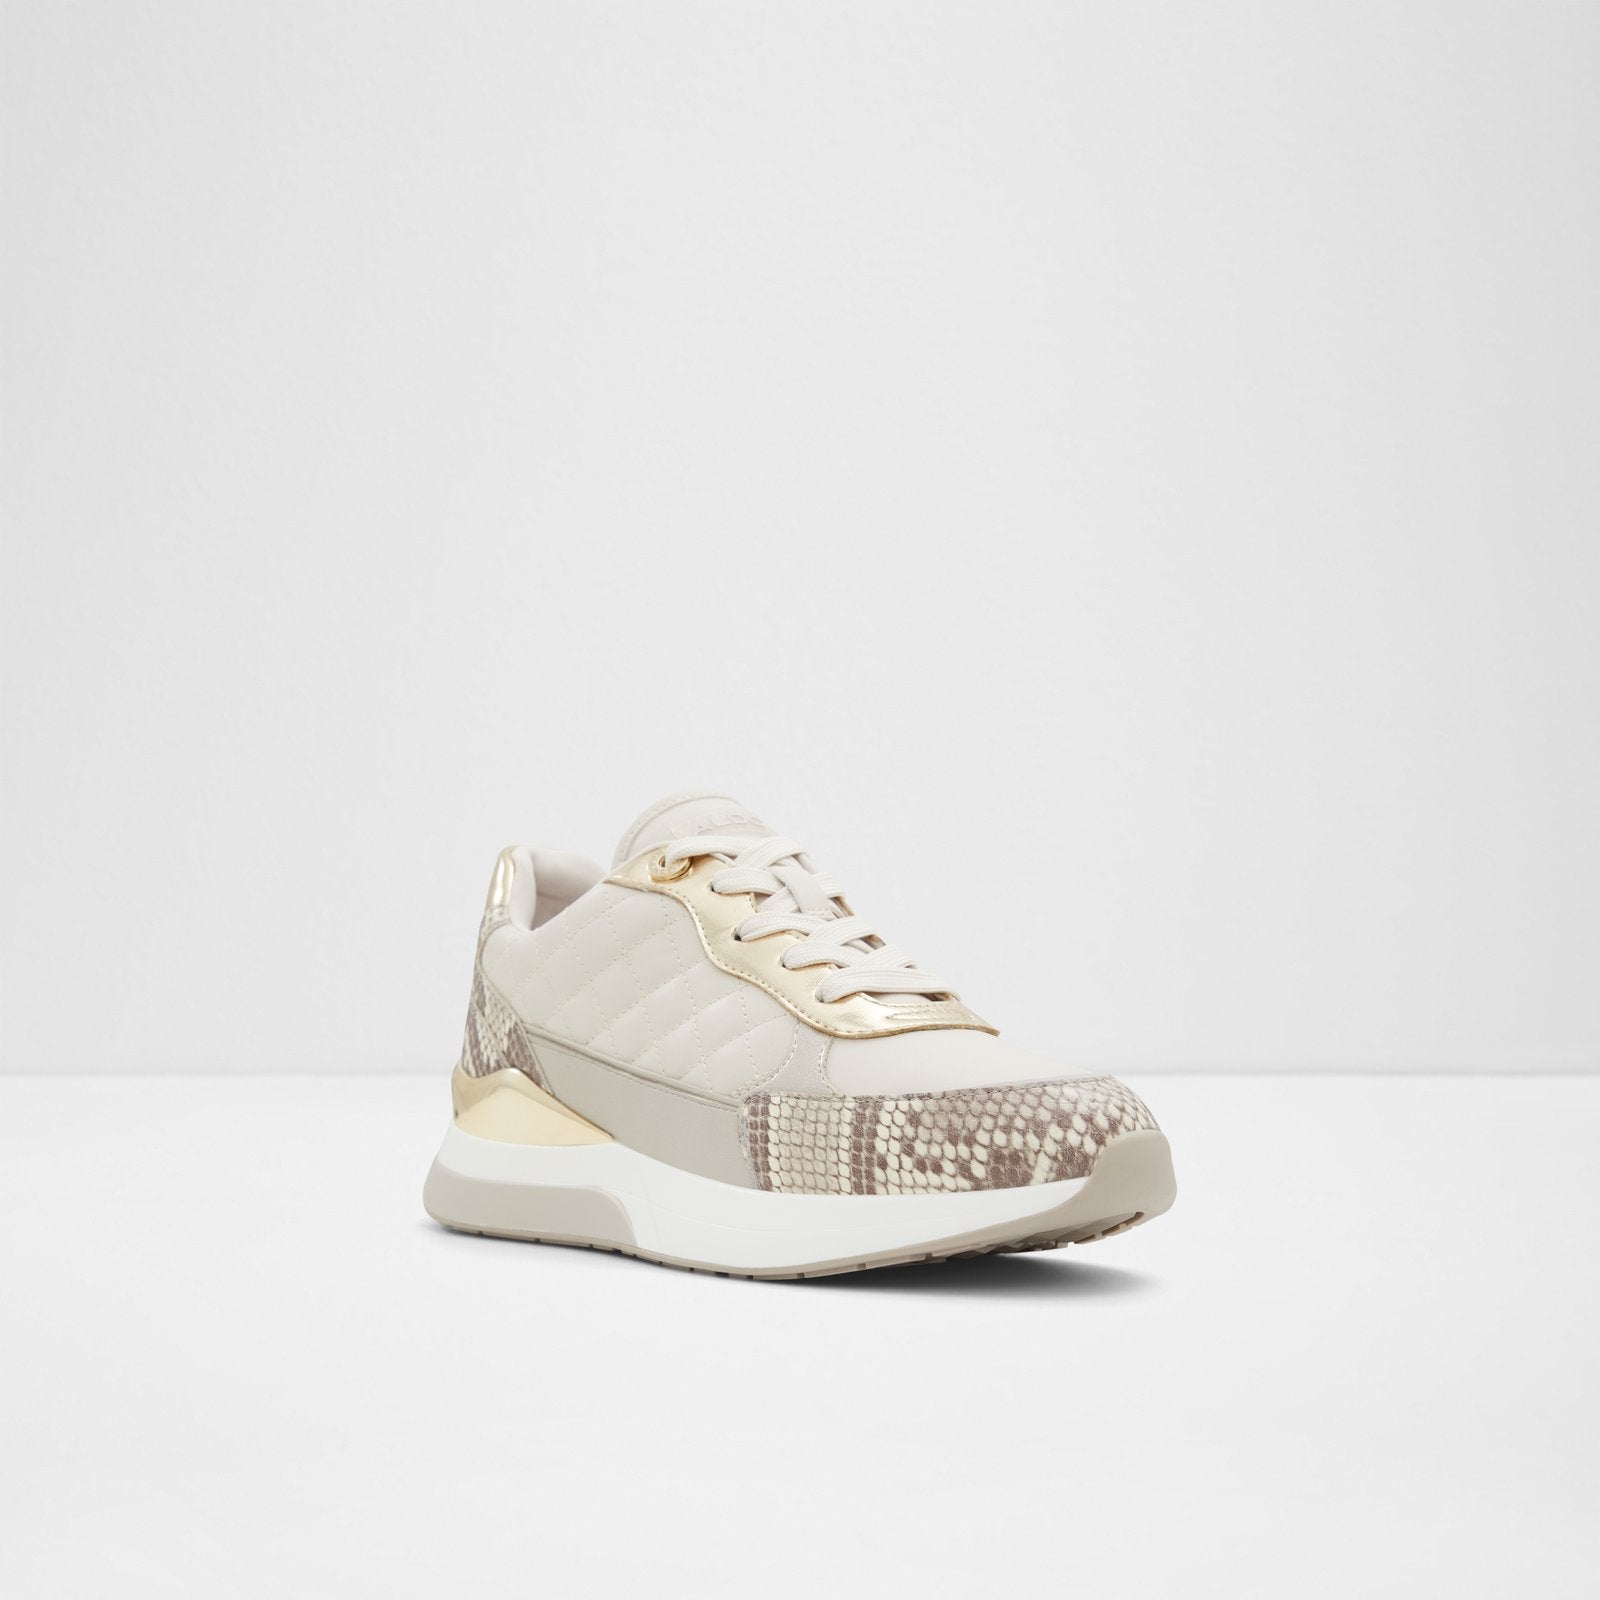 Cosmicstep / Sneakers Women Shoes - Light Gray - ALDO KSA